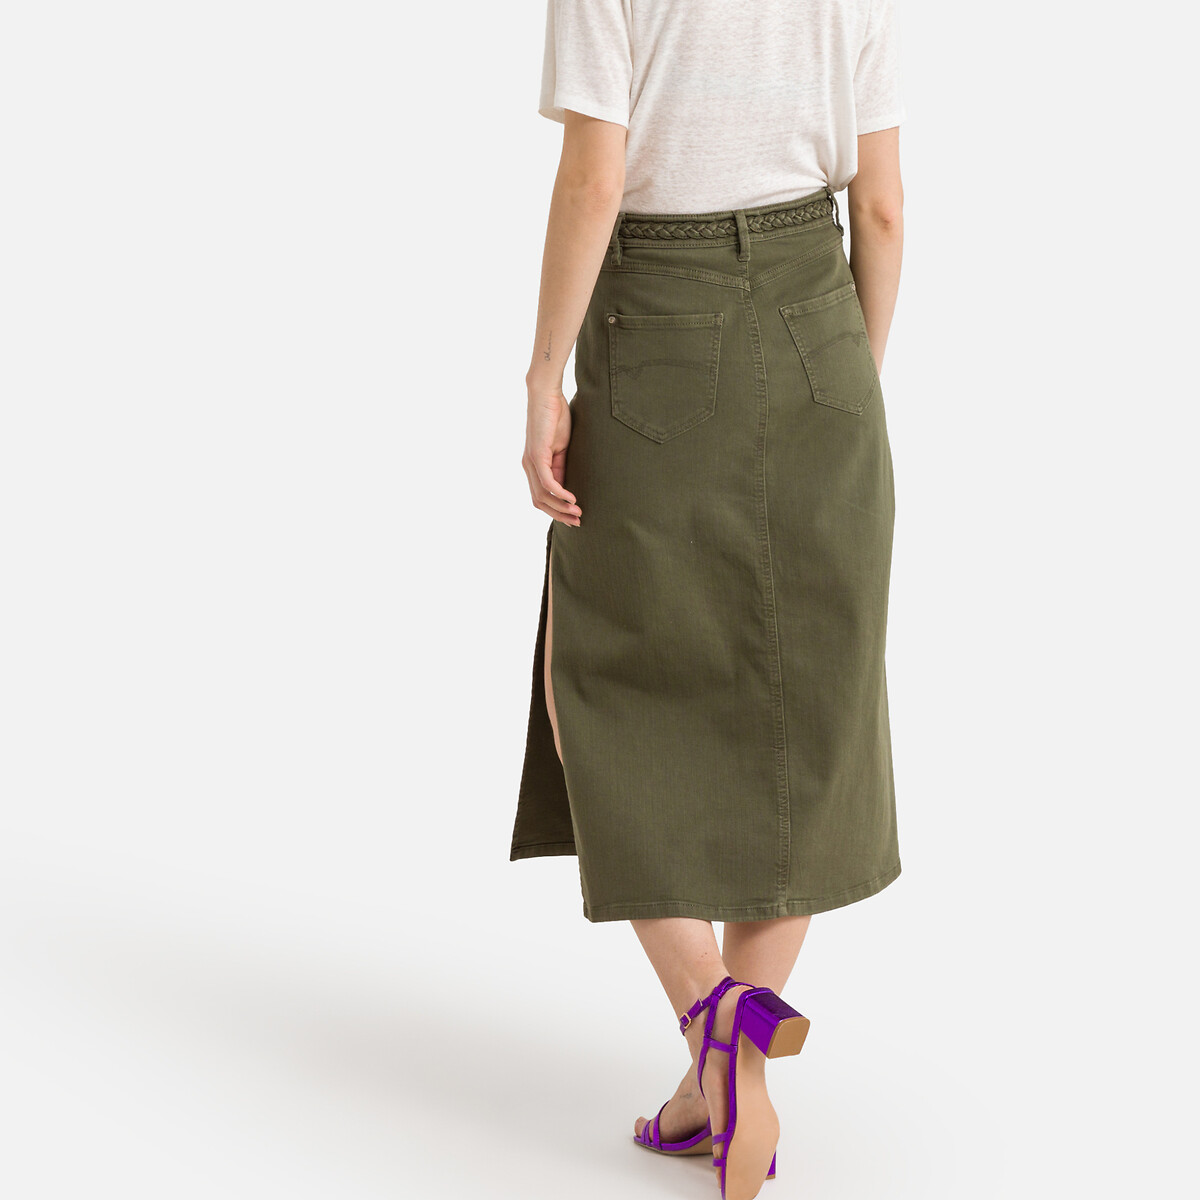 Cotton Midi Skirt with High Waist and Side Split